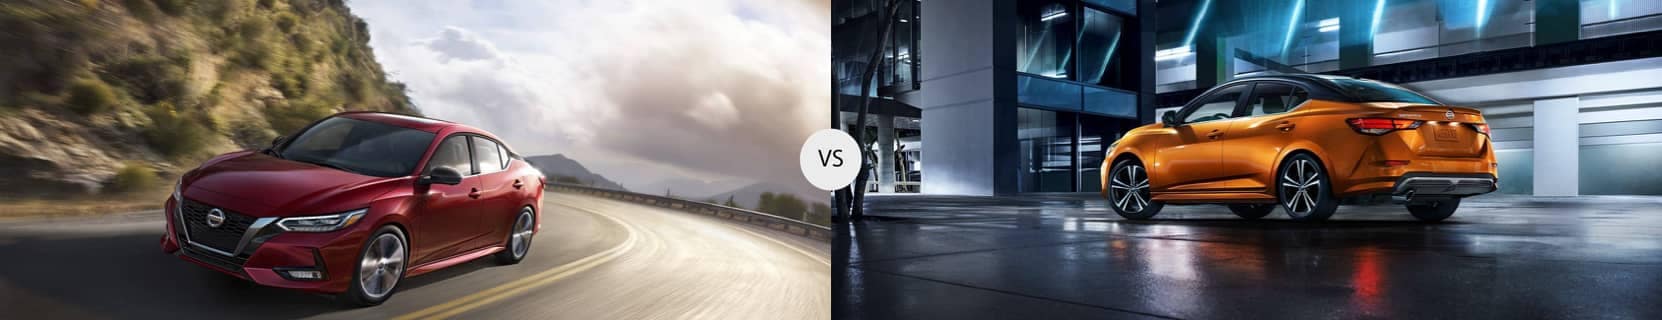 2017 Nissan Sentra S vs 2017 Nissan Sentra SV